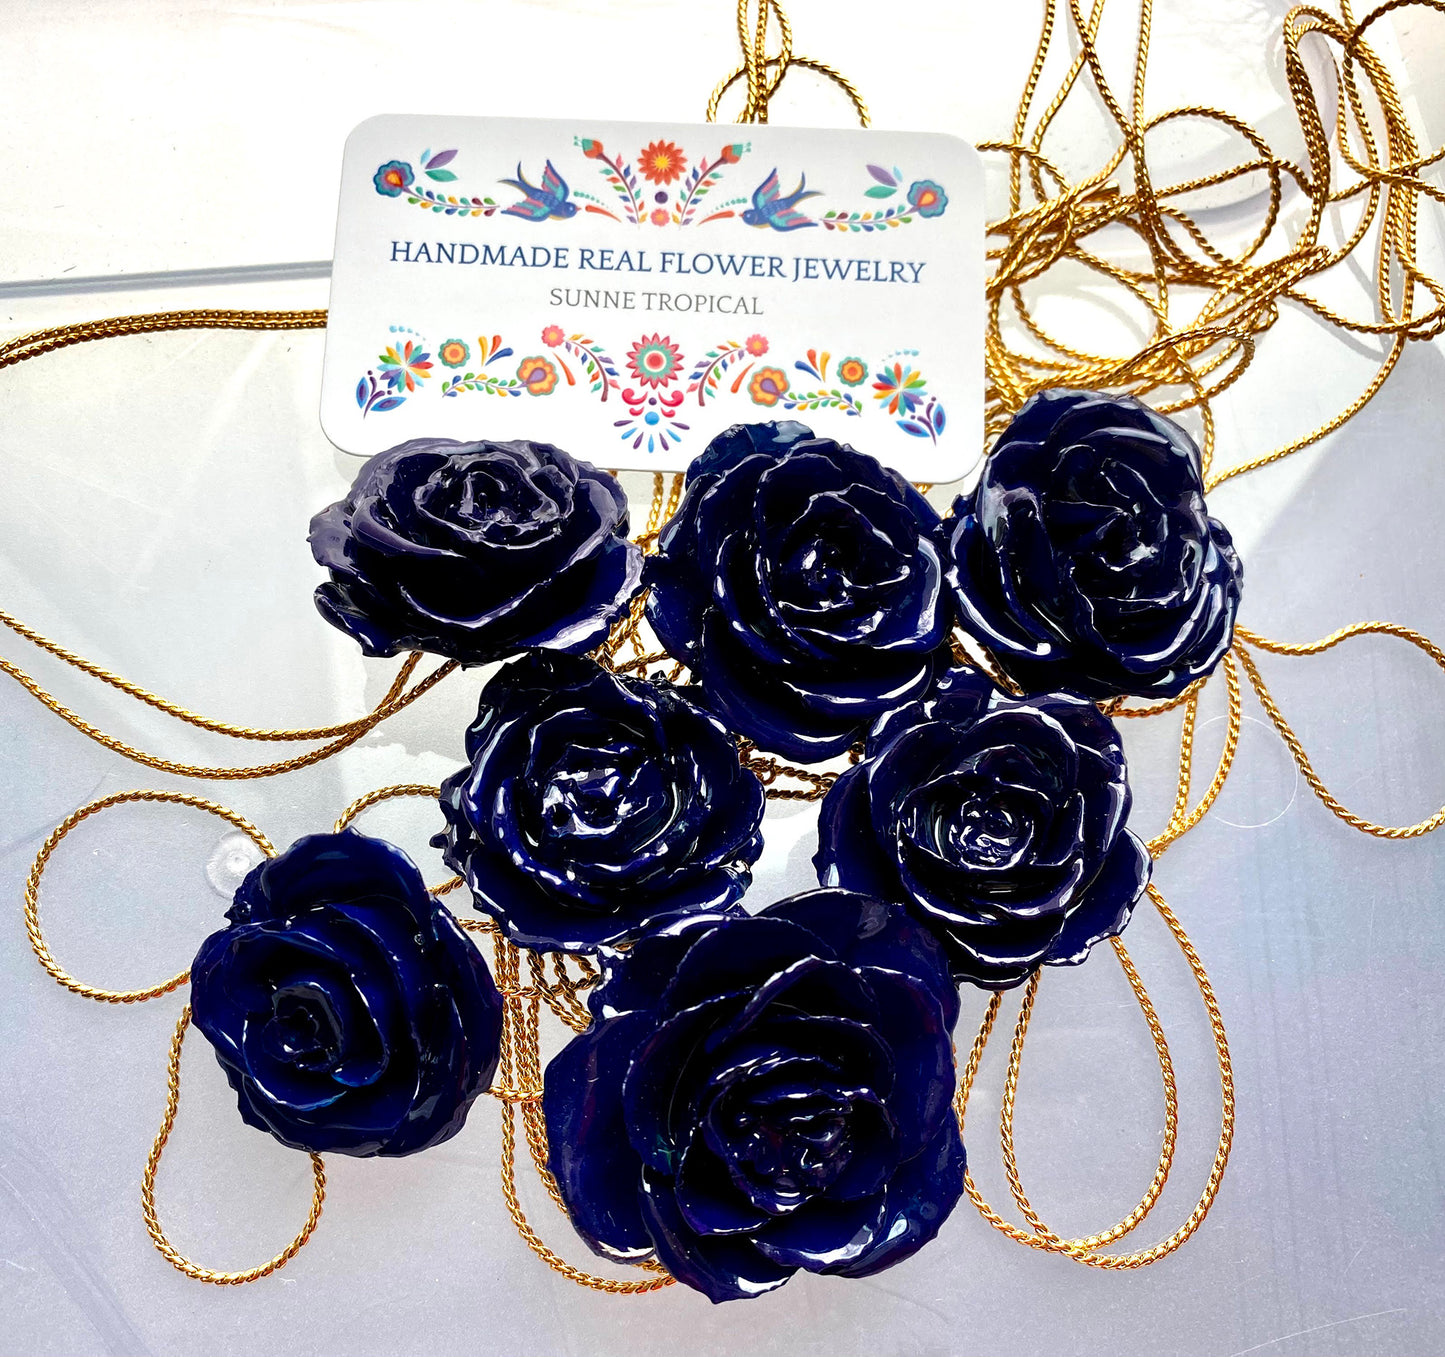 Mini Rose Mini 1.5-2.25 inch Pendant Necklace 18 inch Gold Plated 24K (Indigo Blue)